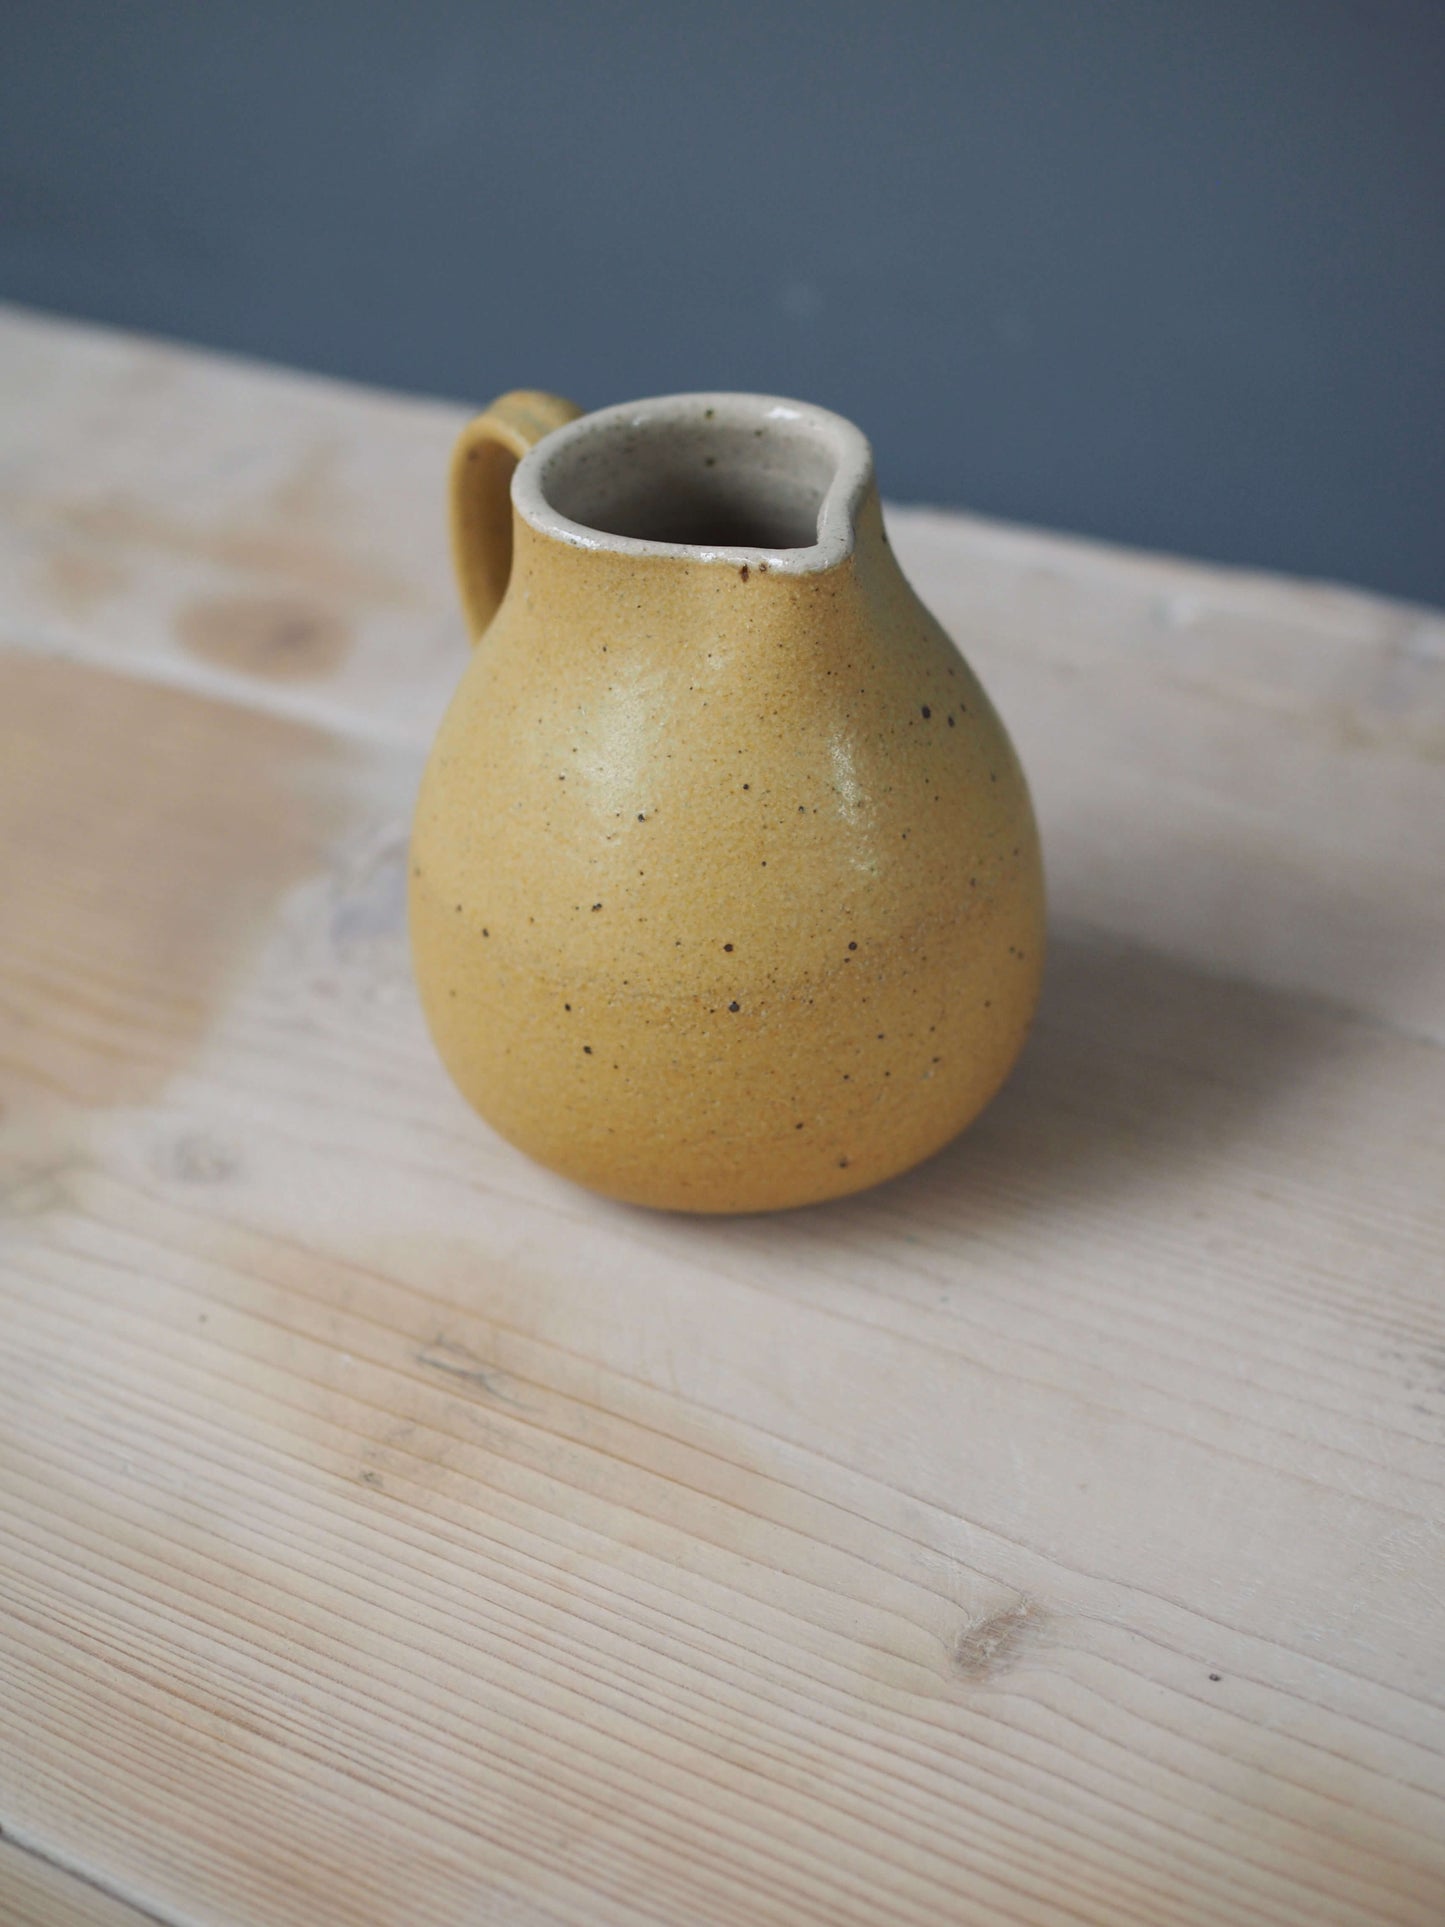 Phoebe Smith Ceramics Milk Jug